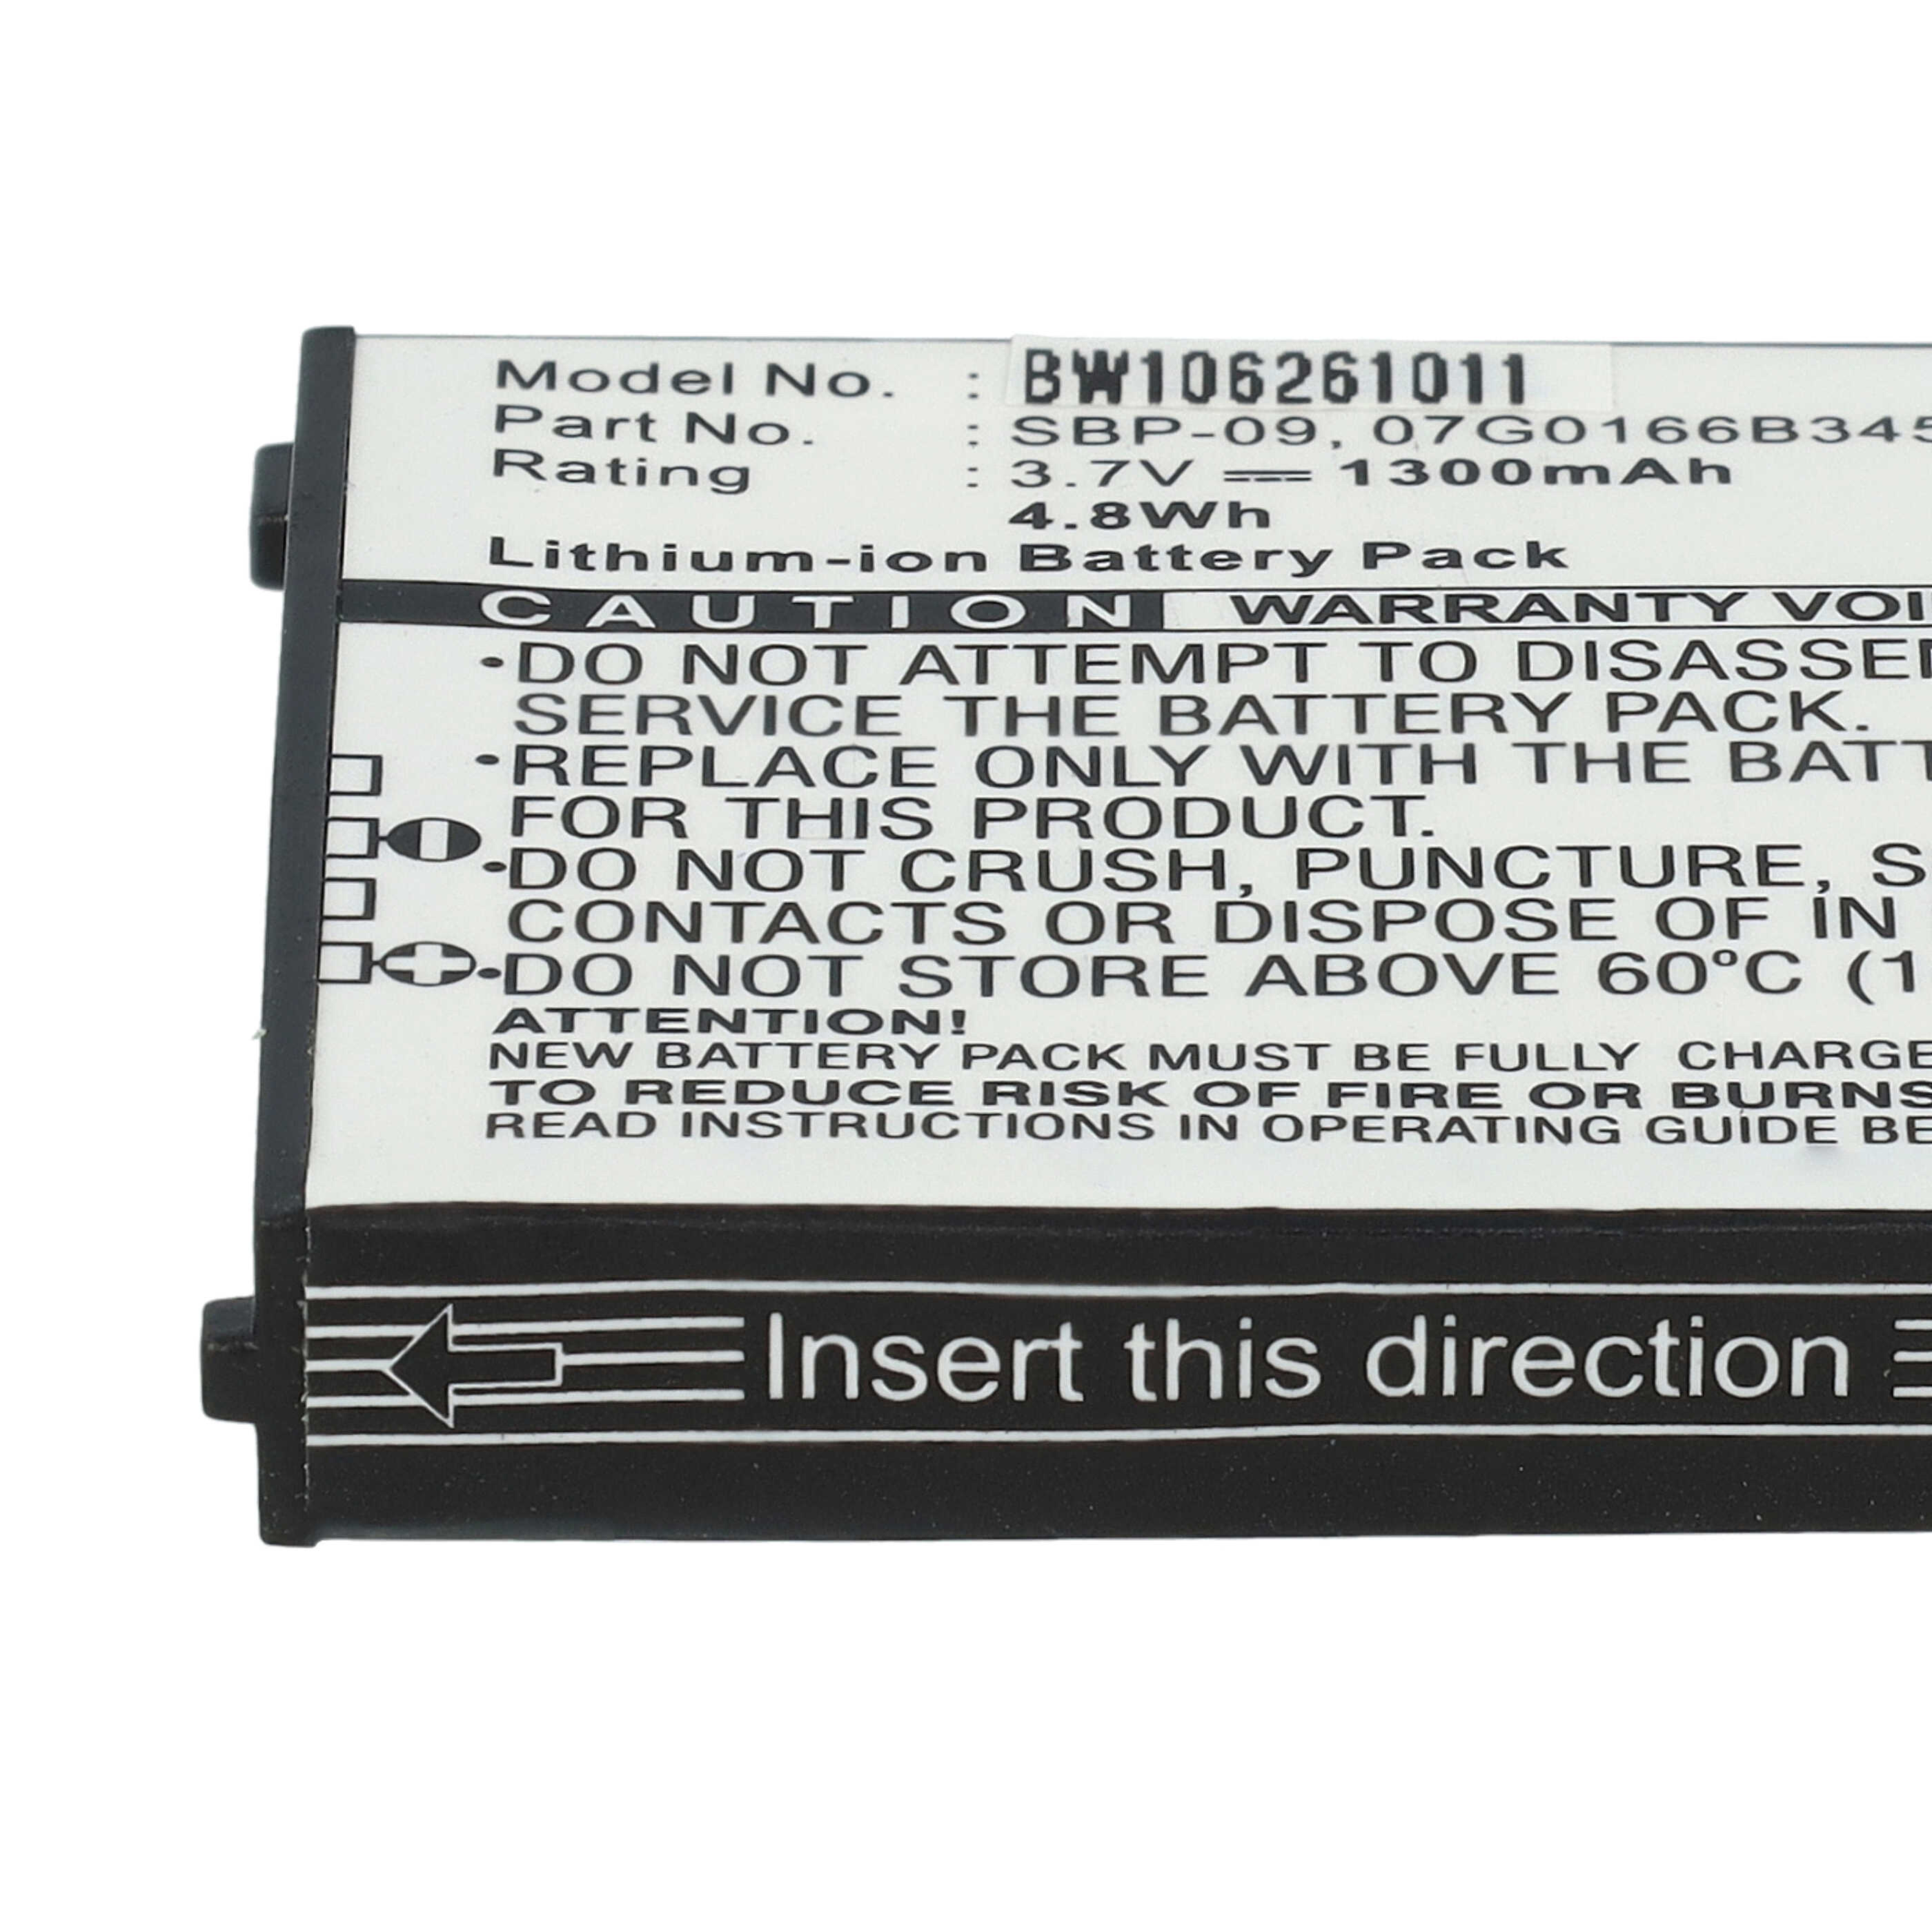 Batería reemplaza Asus 07G0166B3450, SBP-09 para móvil, teléfono Asus - 1300 mAh 3,7 V Li-Ion